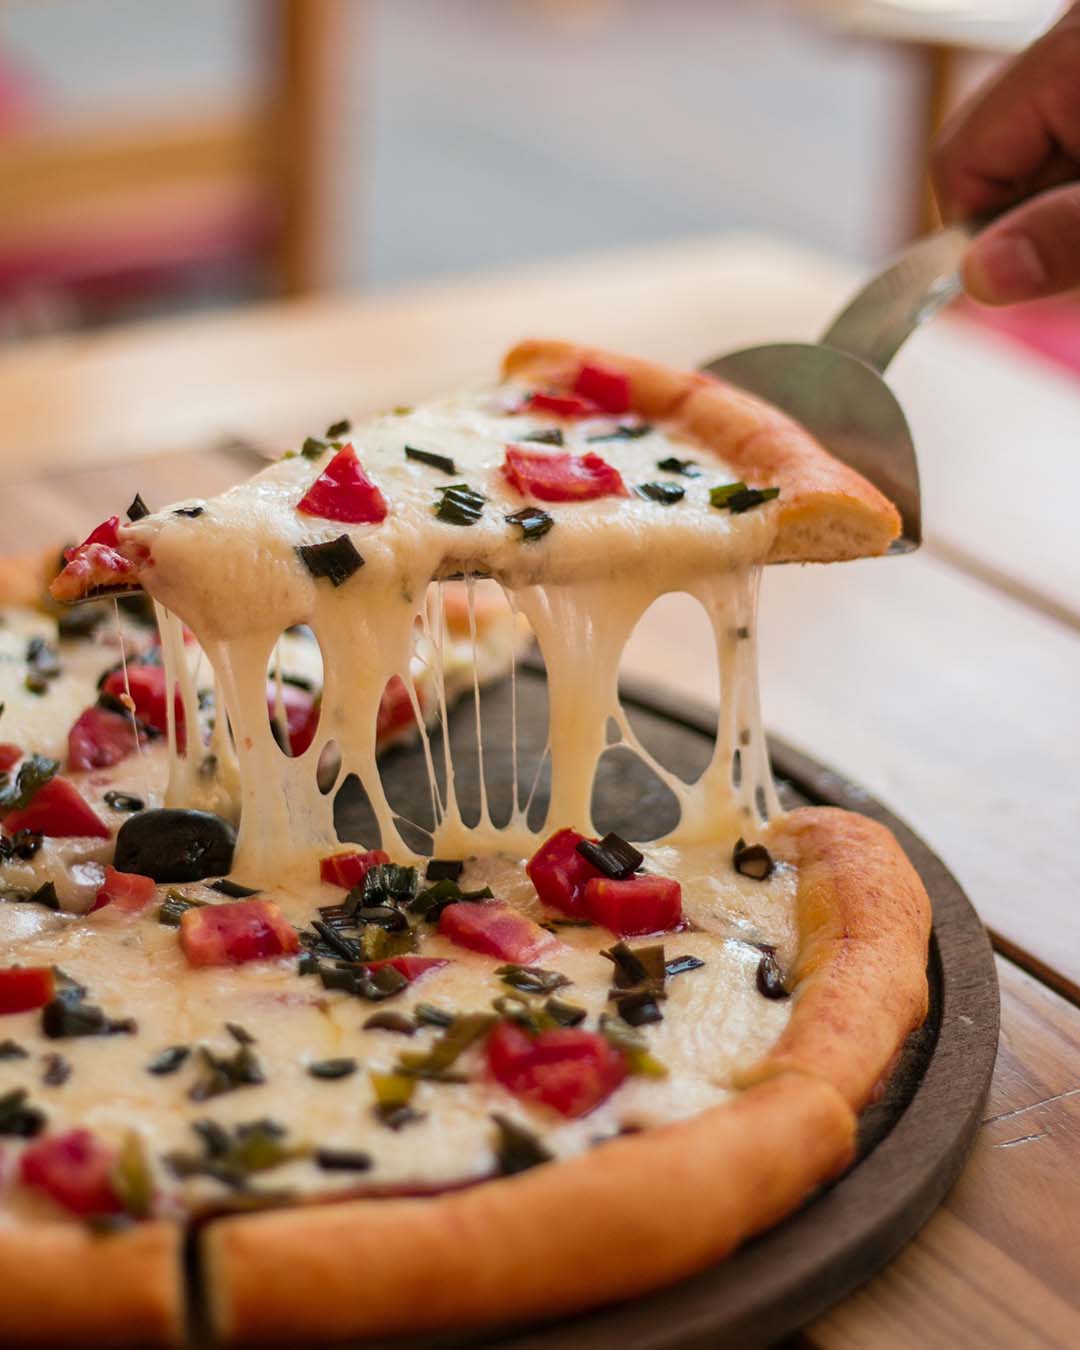 wedding food ideas pizza with melted cheese nicolas perondi unsplash